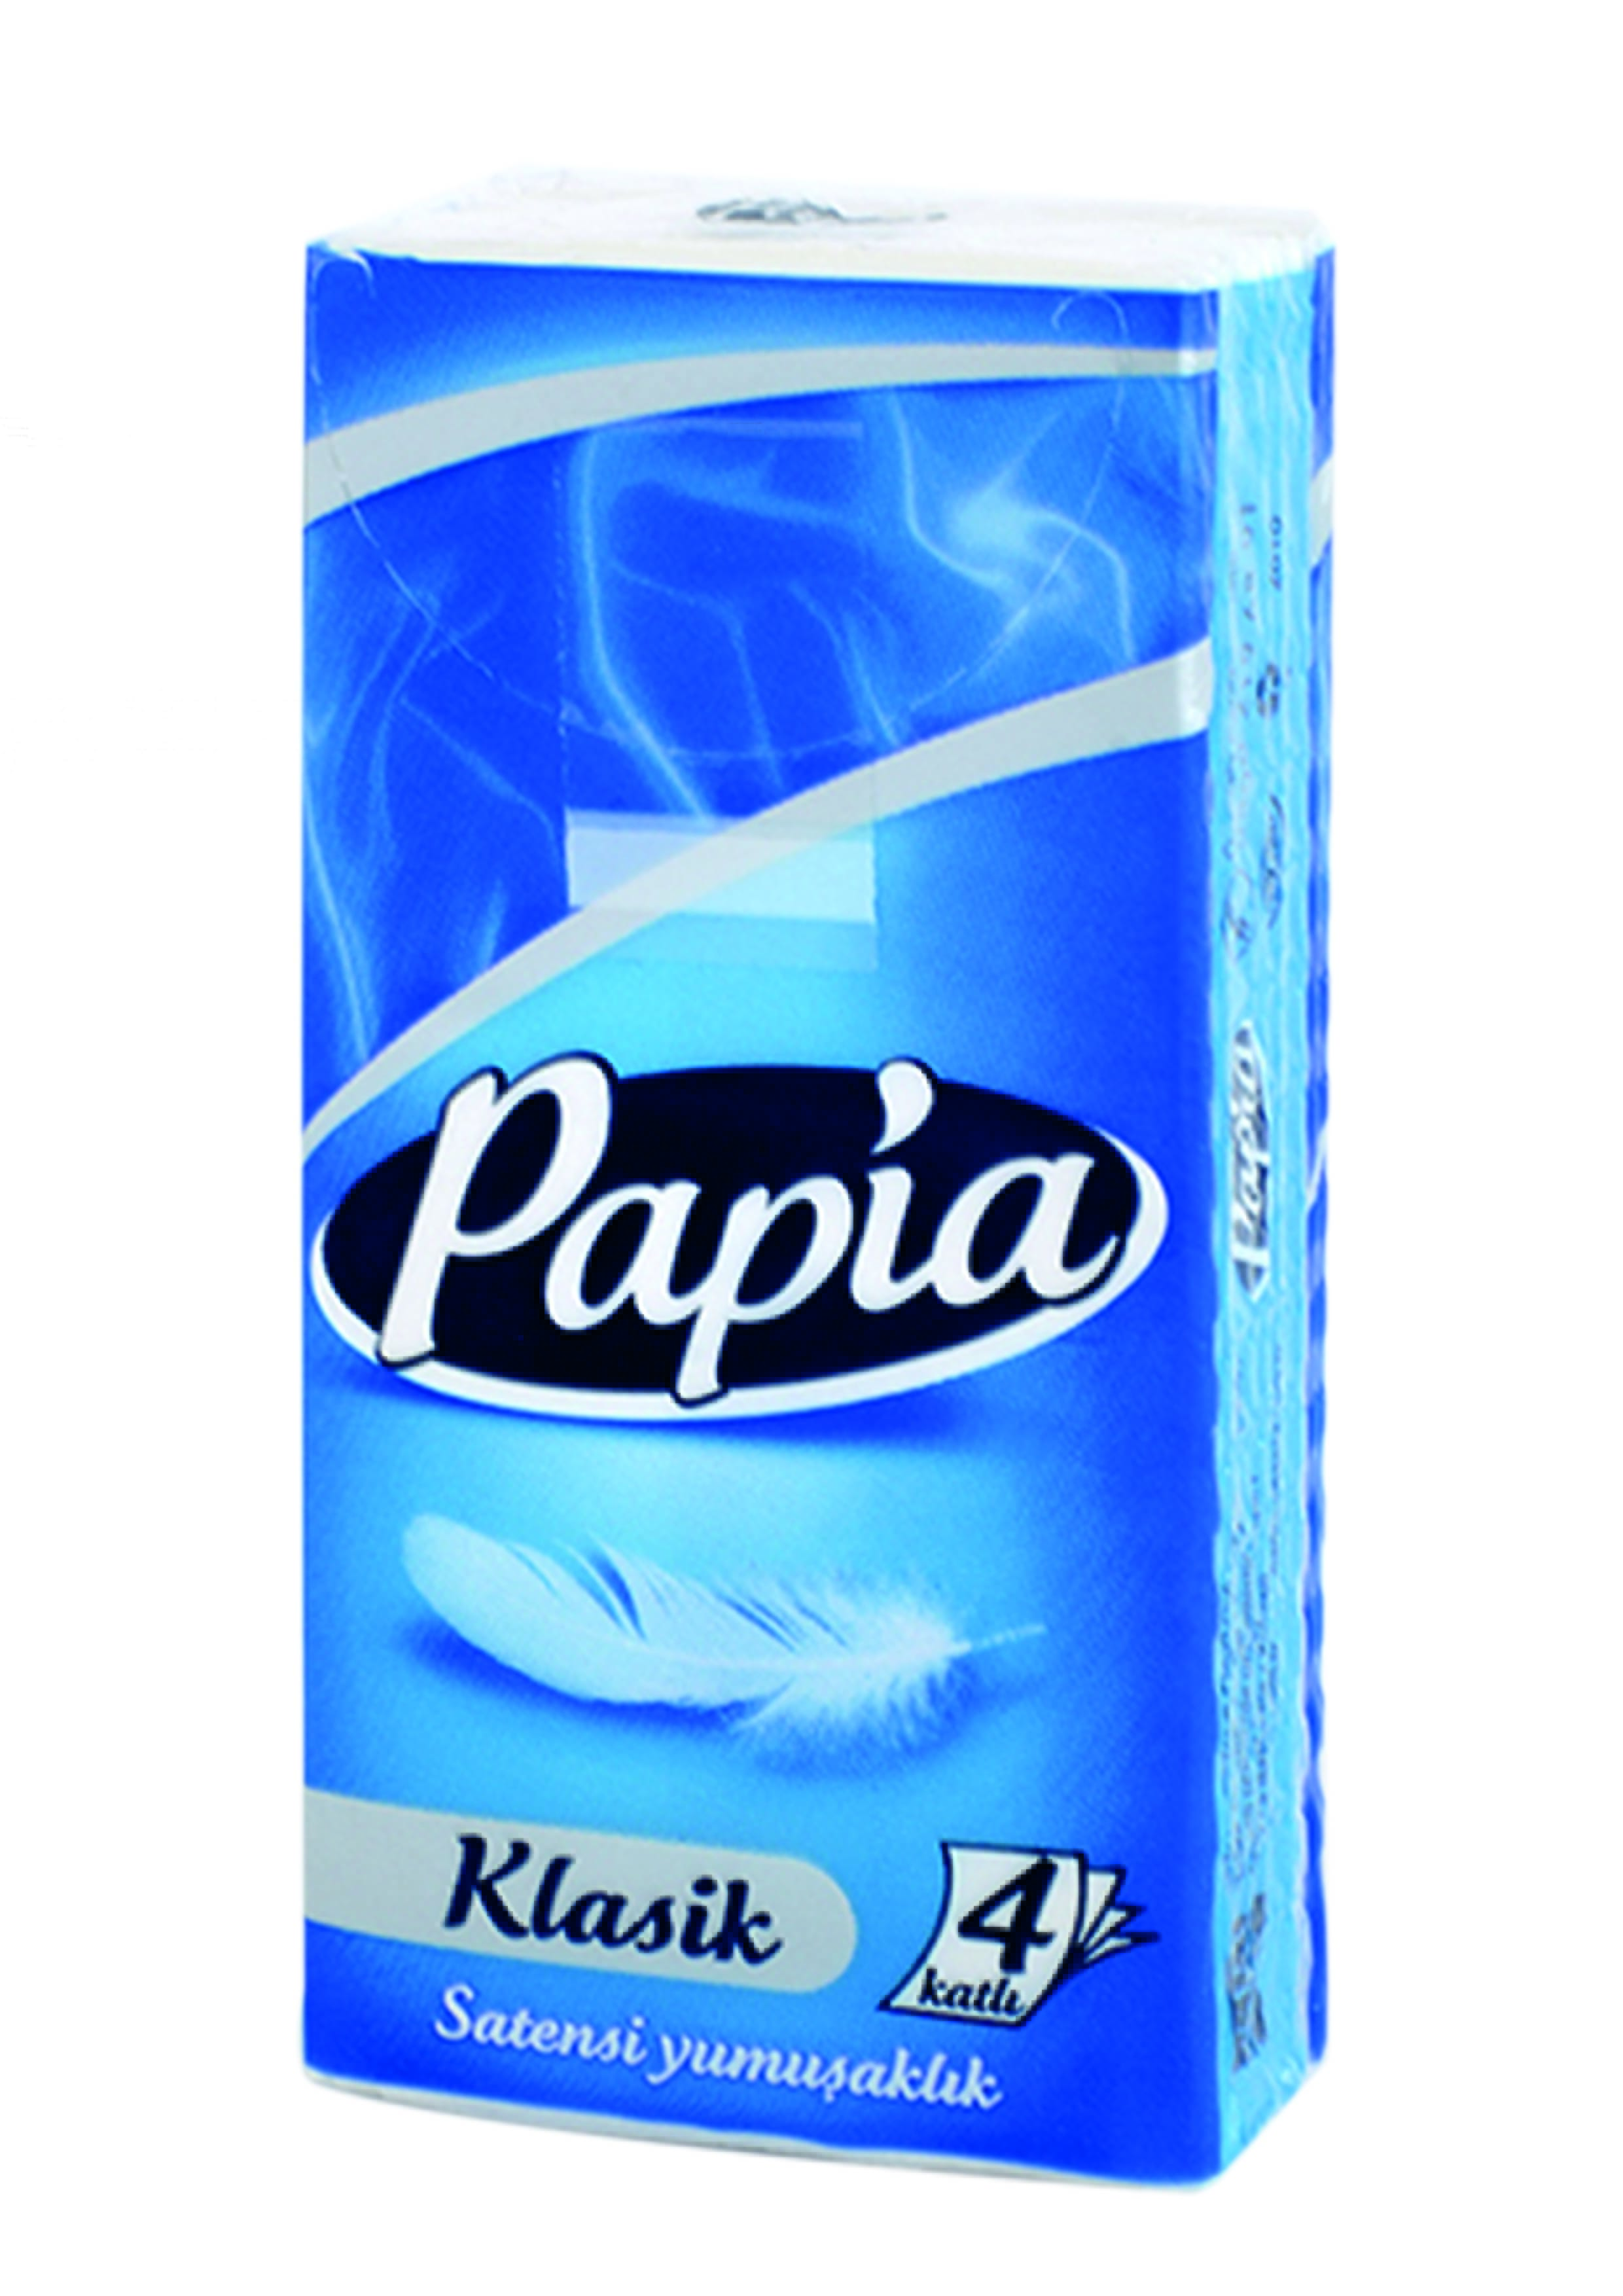 Papia Napkin Classic Pocket 10 pc 